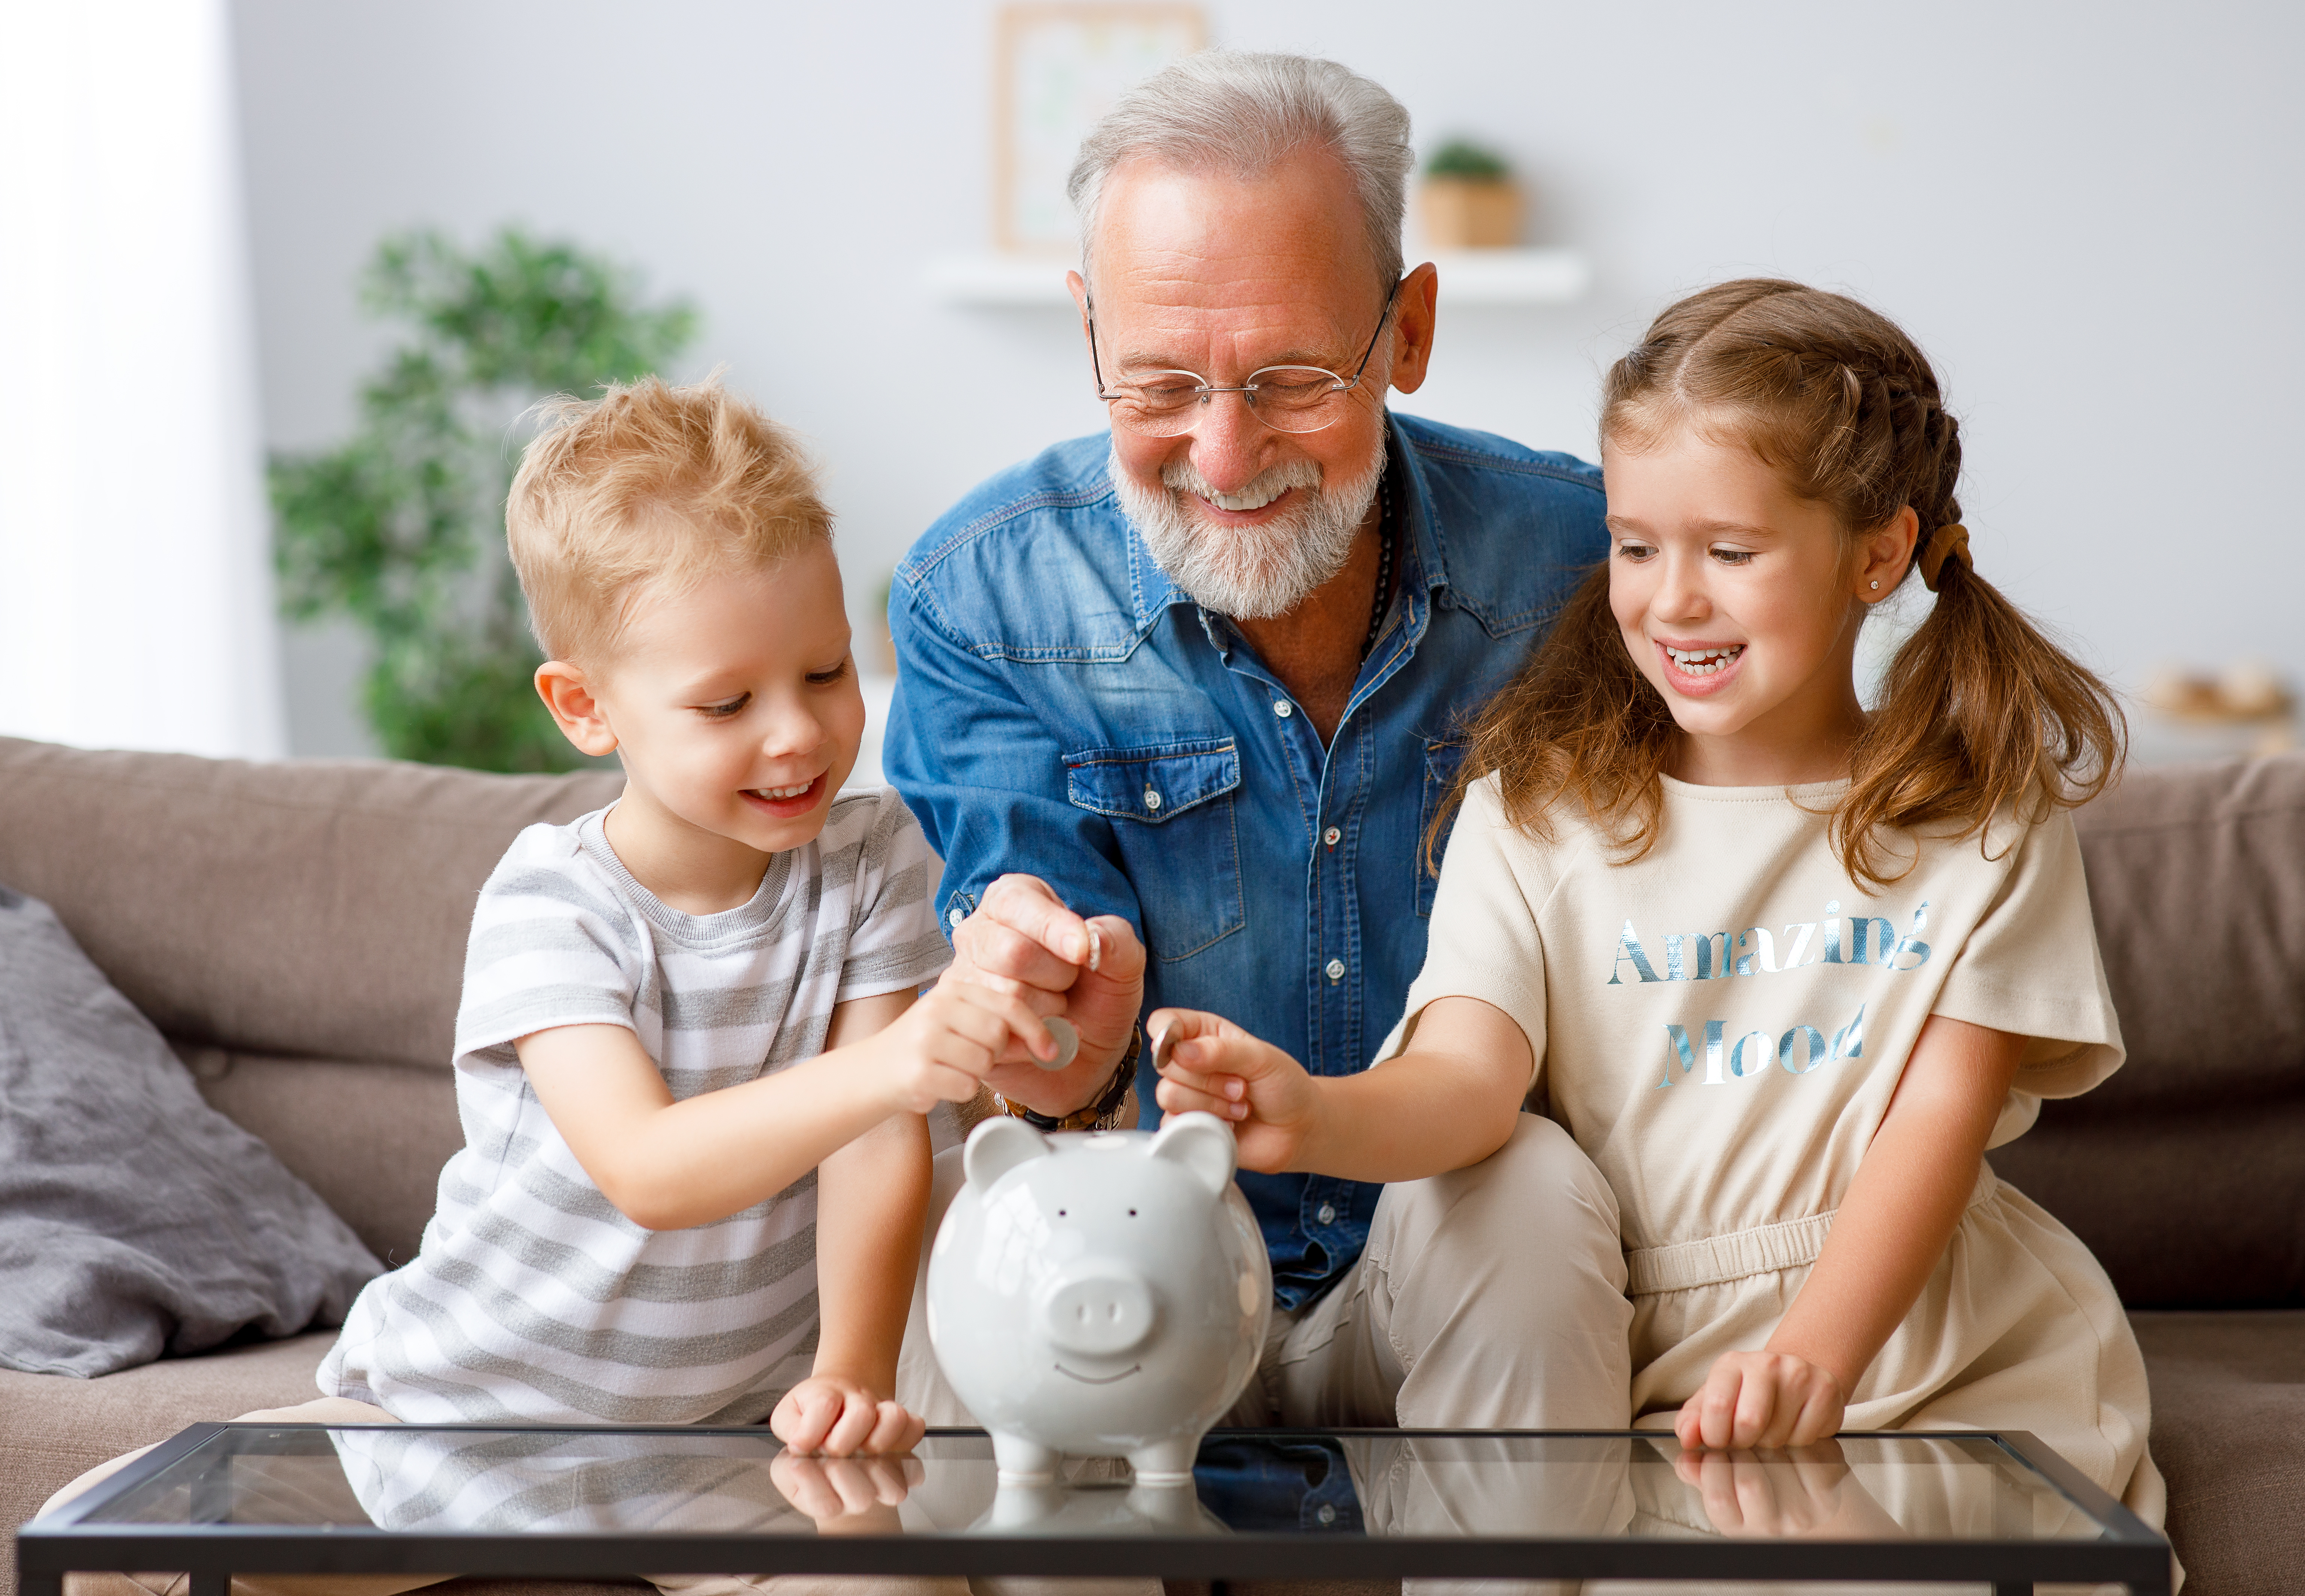 grandpa and kids putting money in piggy bank